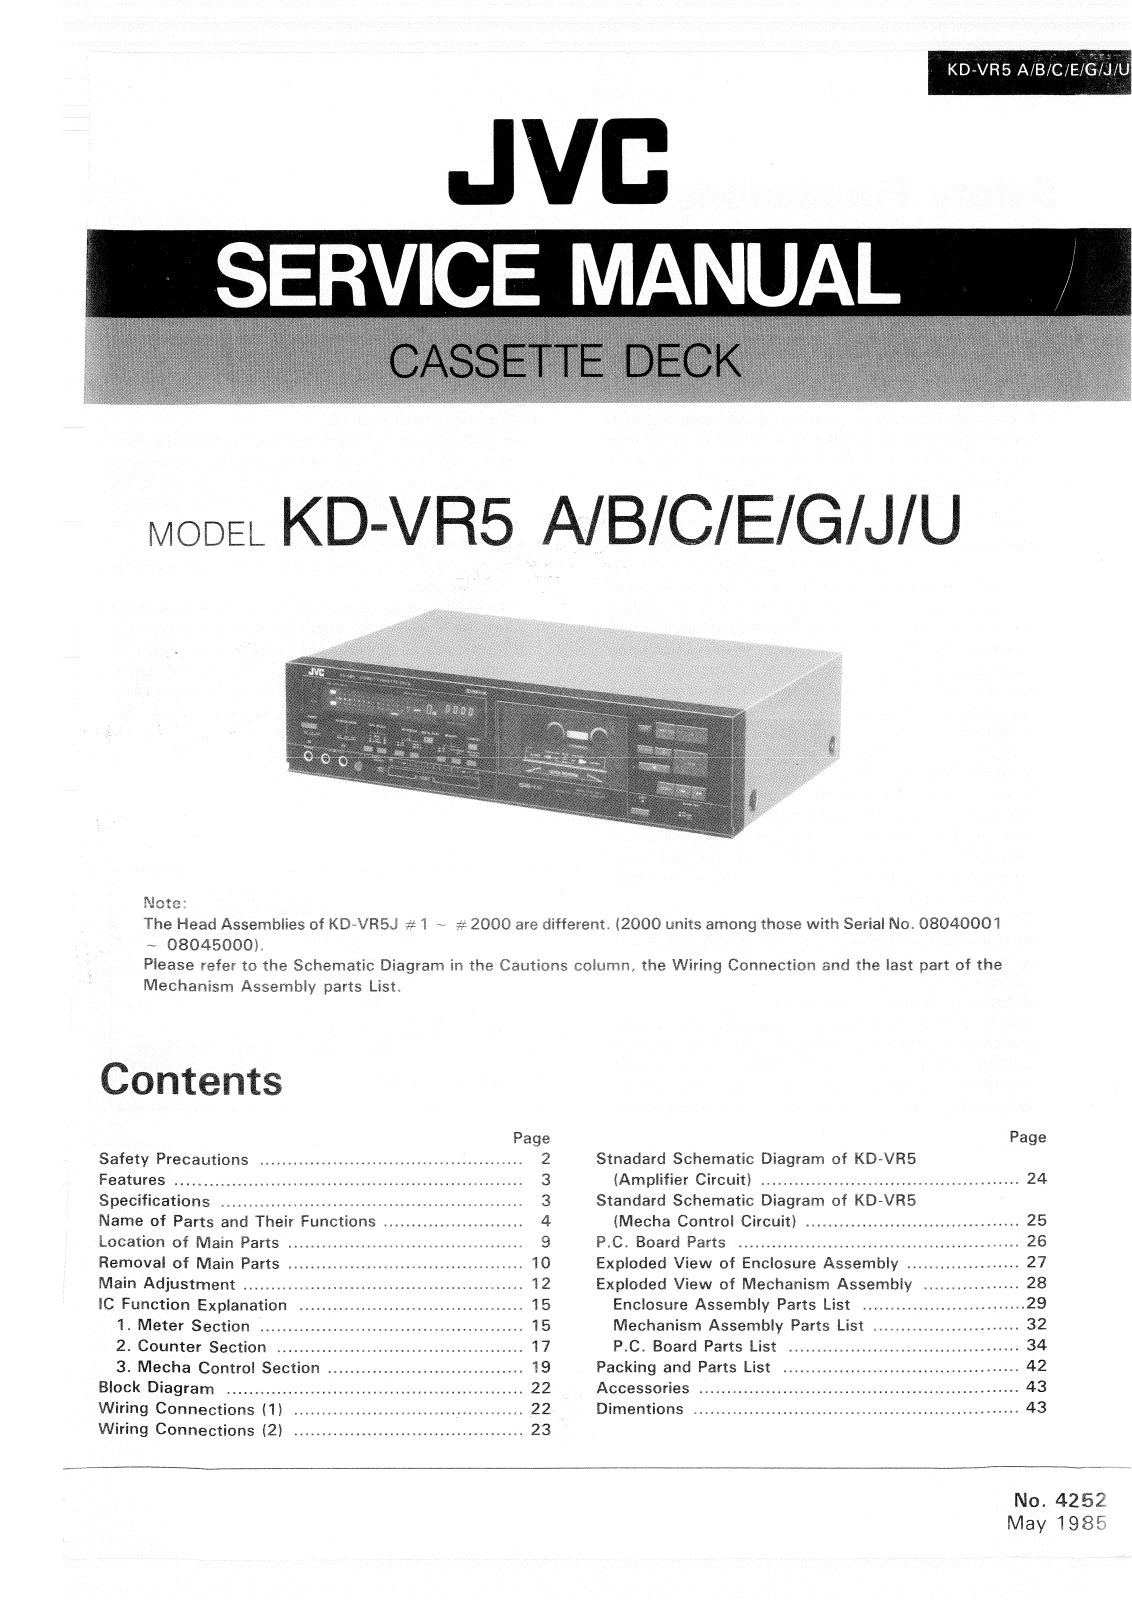 Jvc KD-VR5 Service Manual